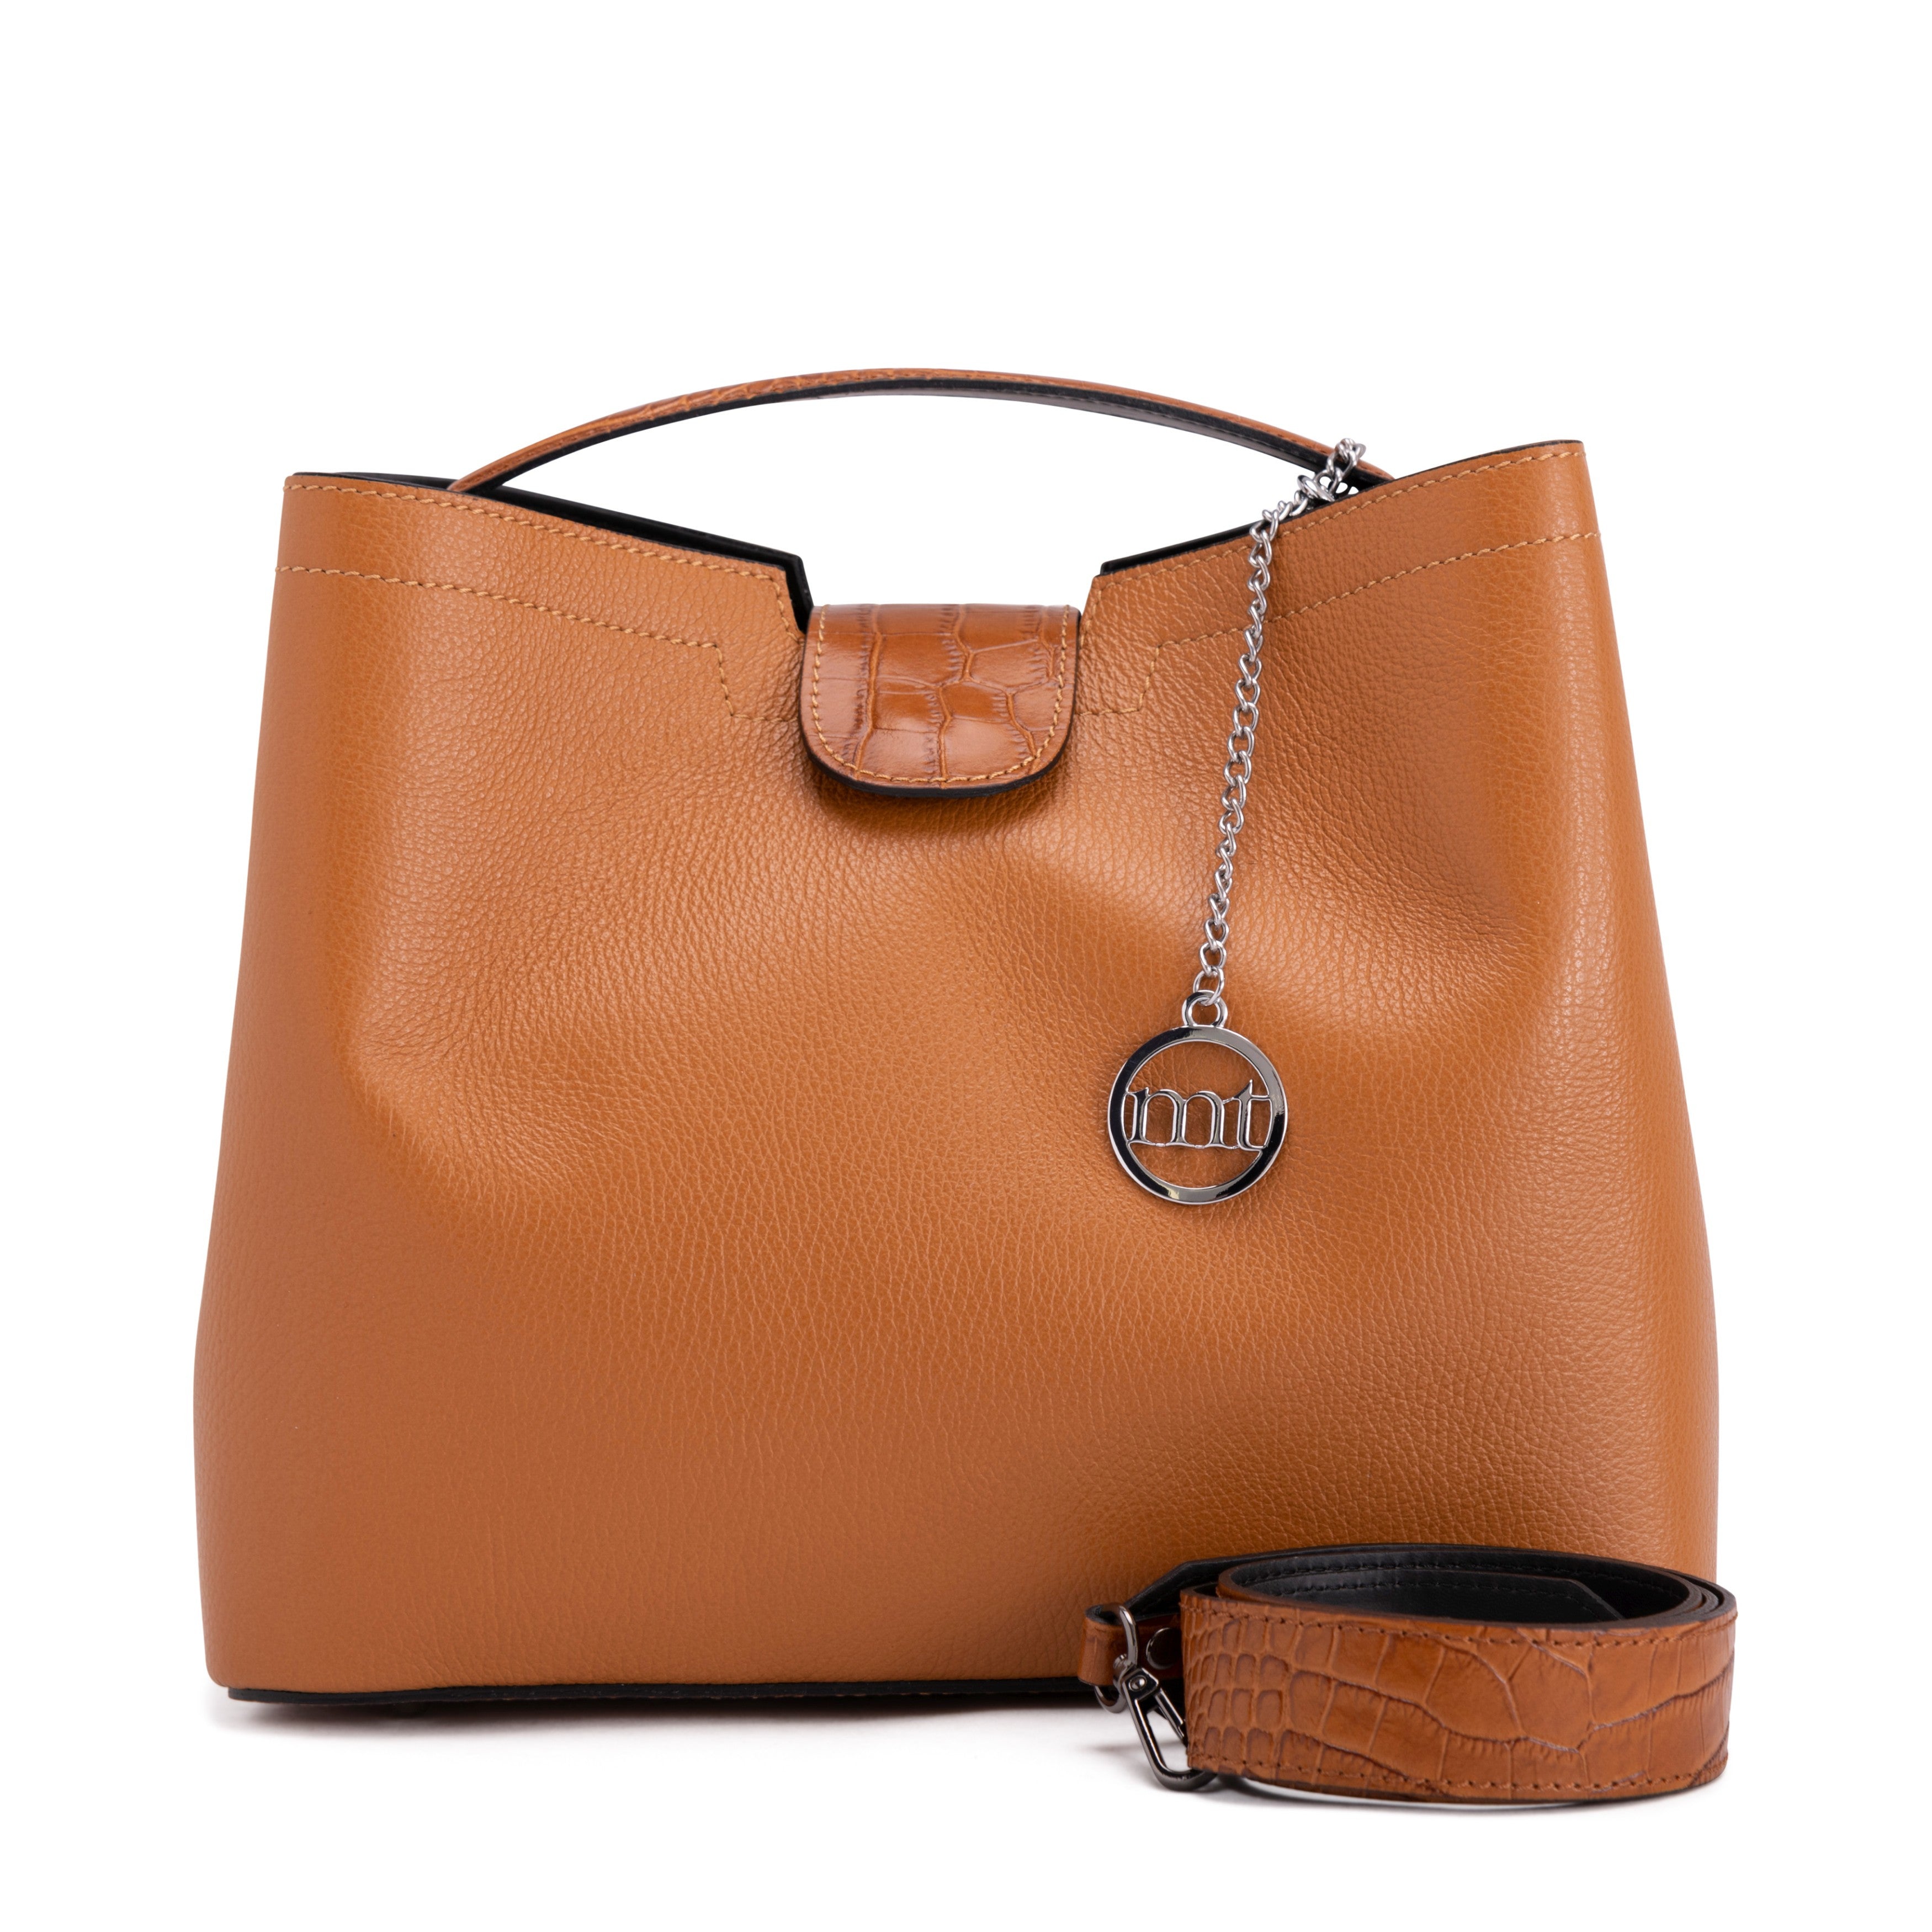 Sofia 26, Italian leather handbag